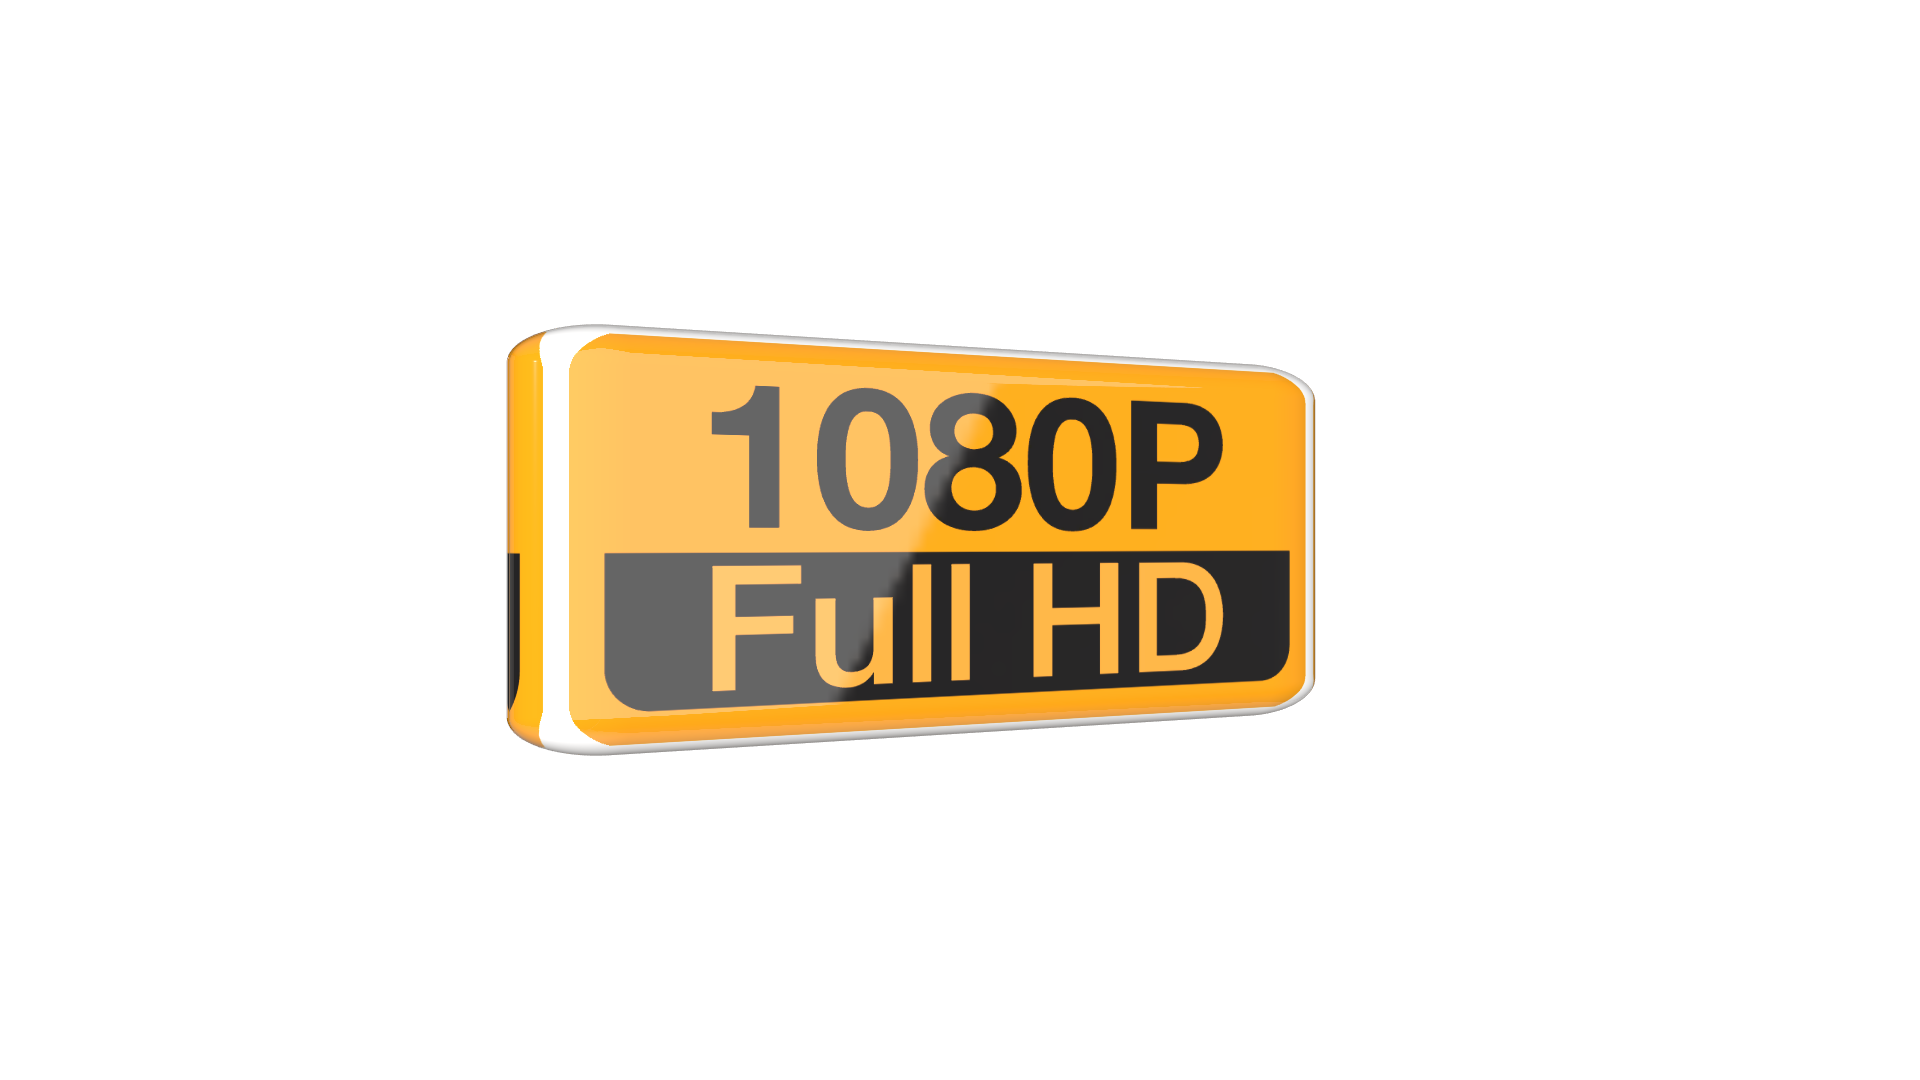 Desgastar solapa Piquete 1080p Full HD Free PNG - MTC TUTORIALS